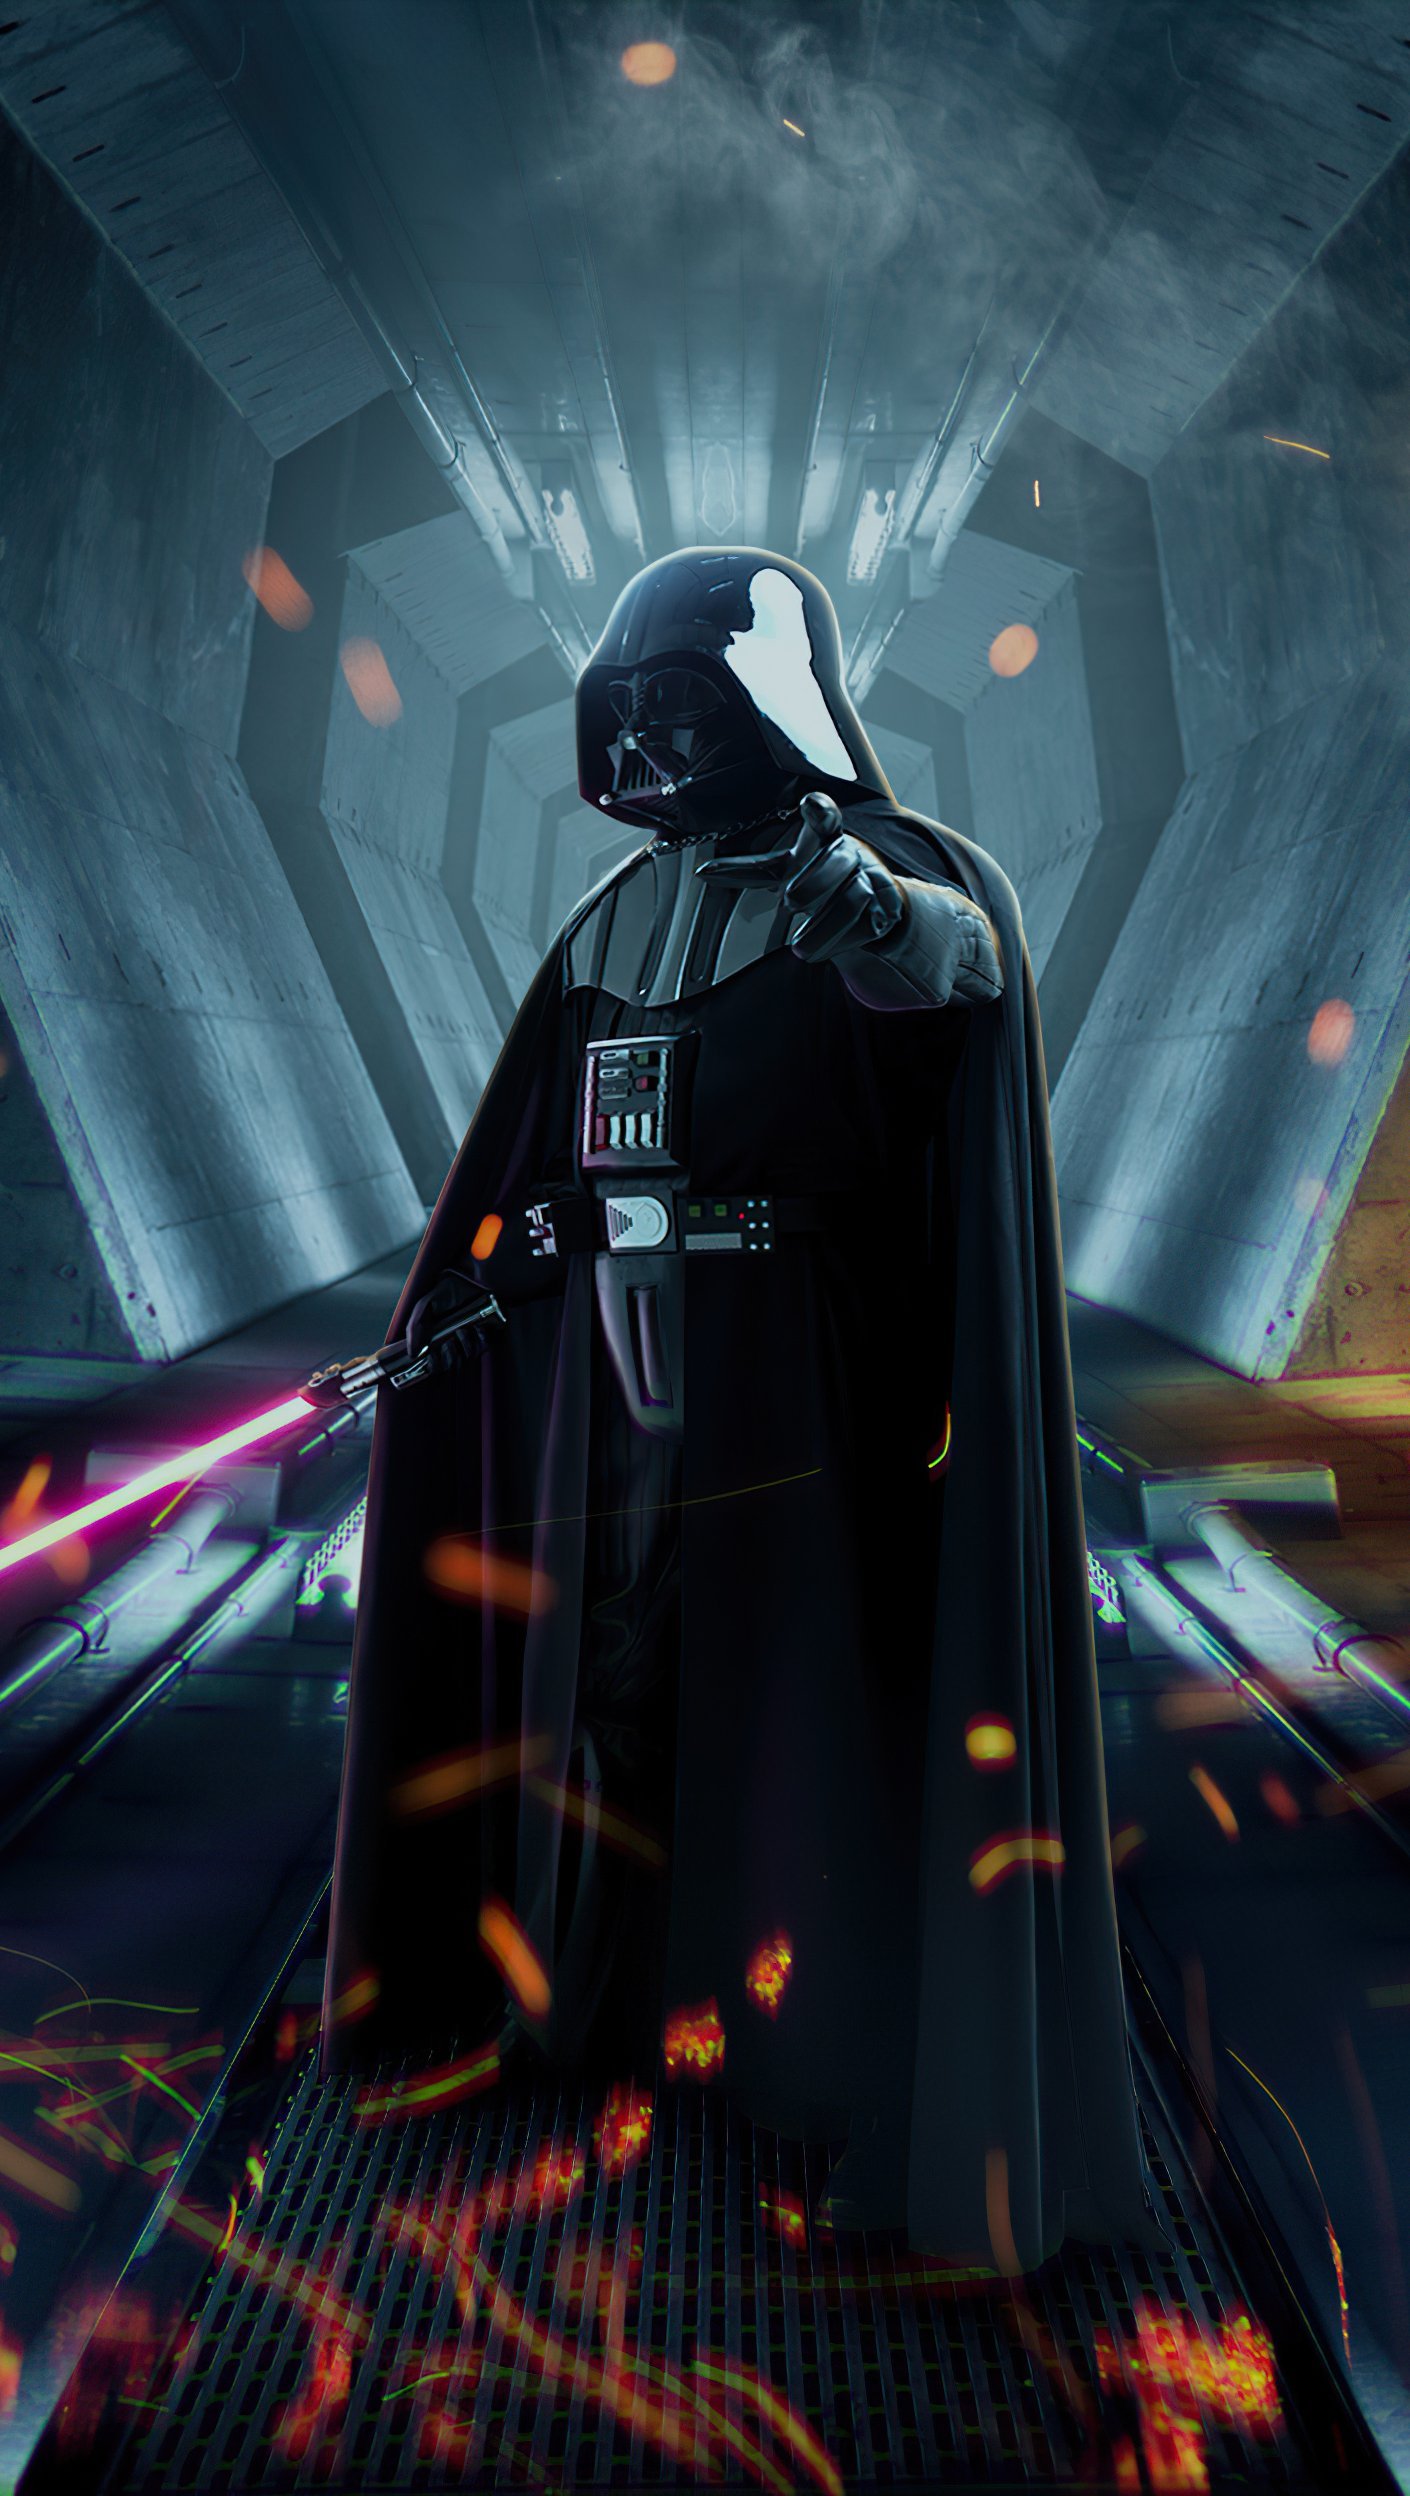 Wallpaper Darth Vader from Star Wars Fanmade Vertical